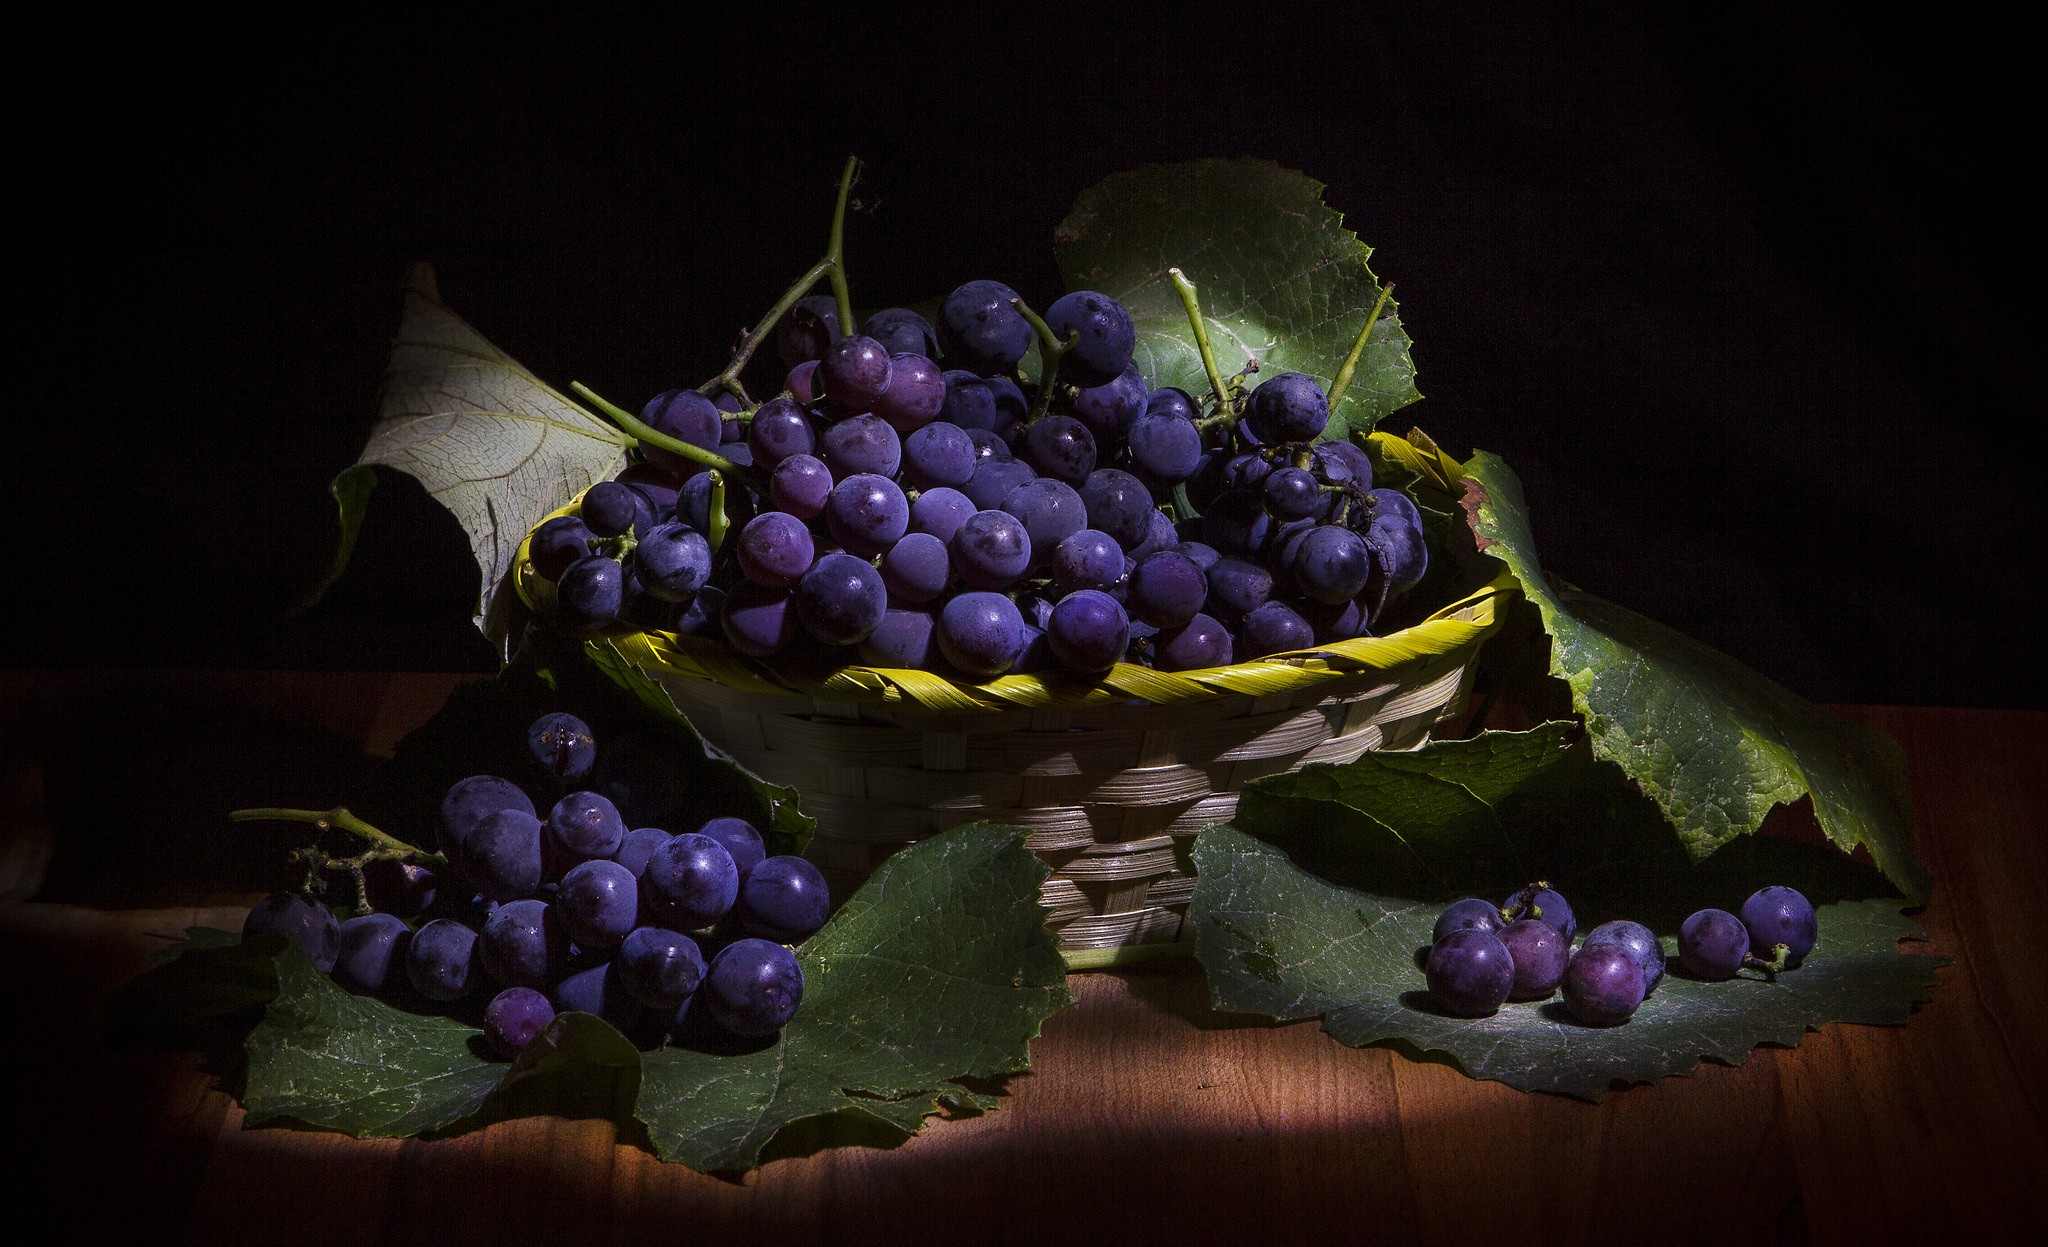 General 2048x1247 plants berries grapes food fruit still life black background indoors simple background baskets